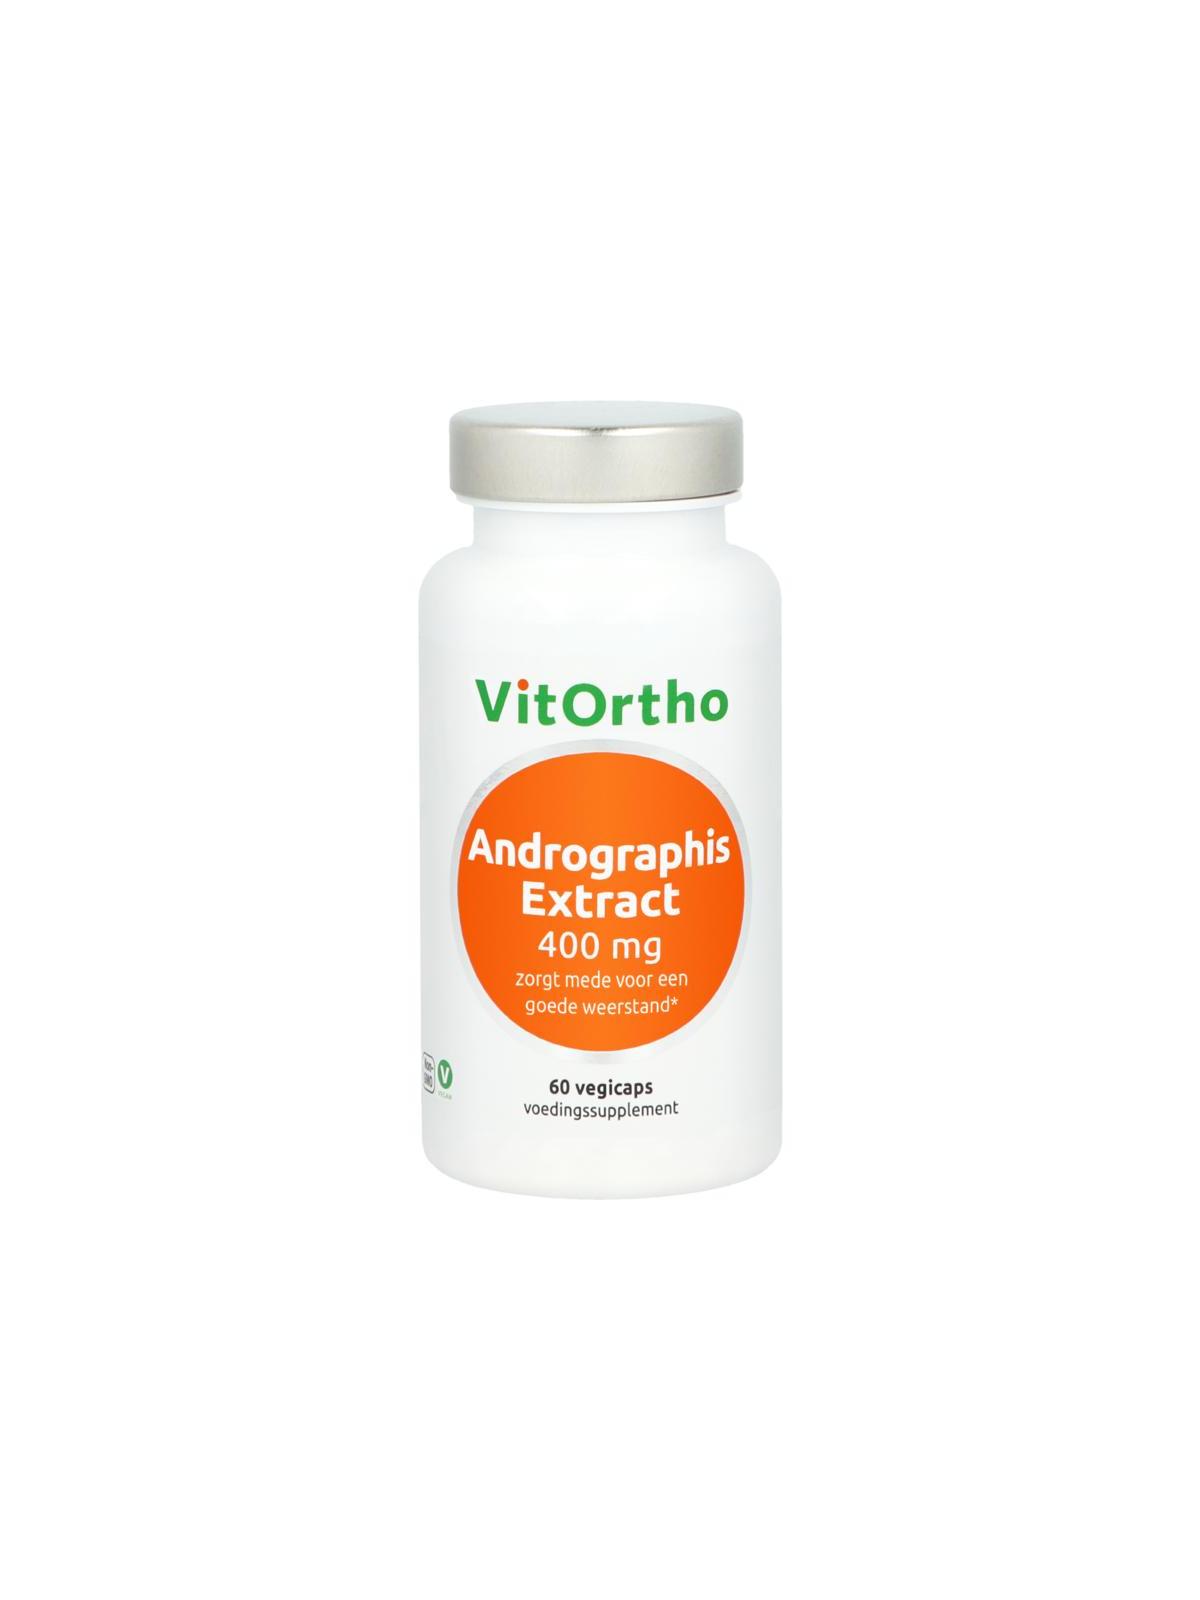 Andrographis extract 400 mg